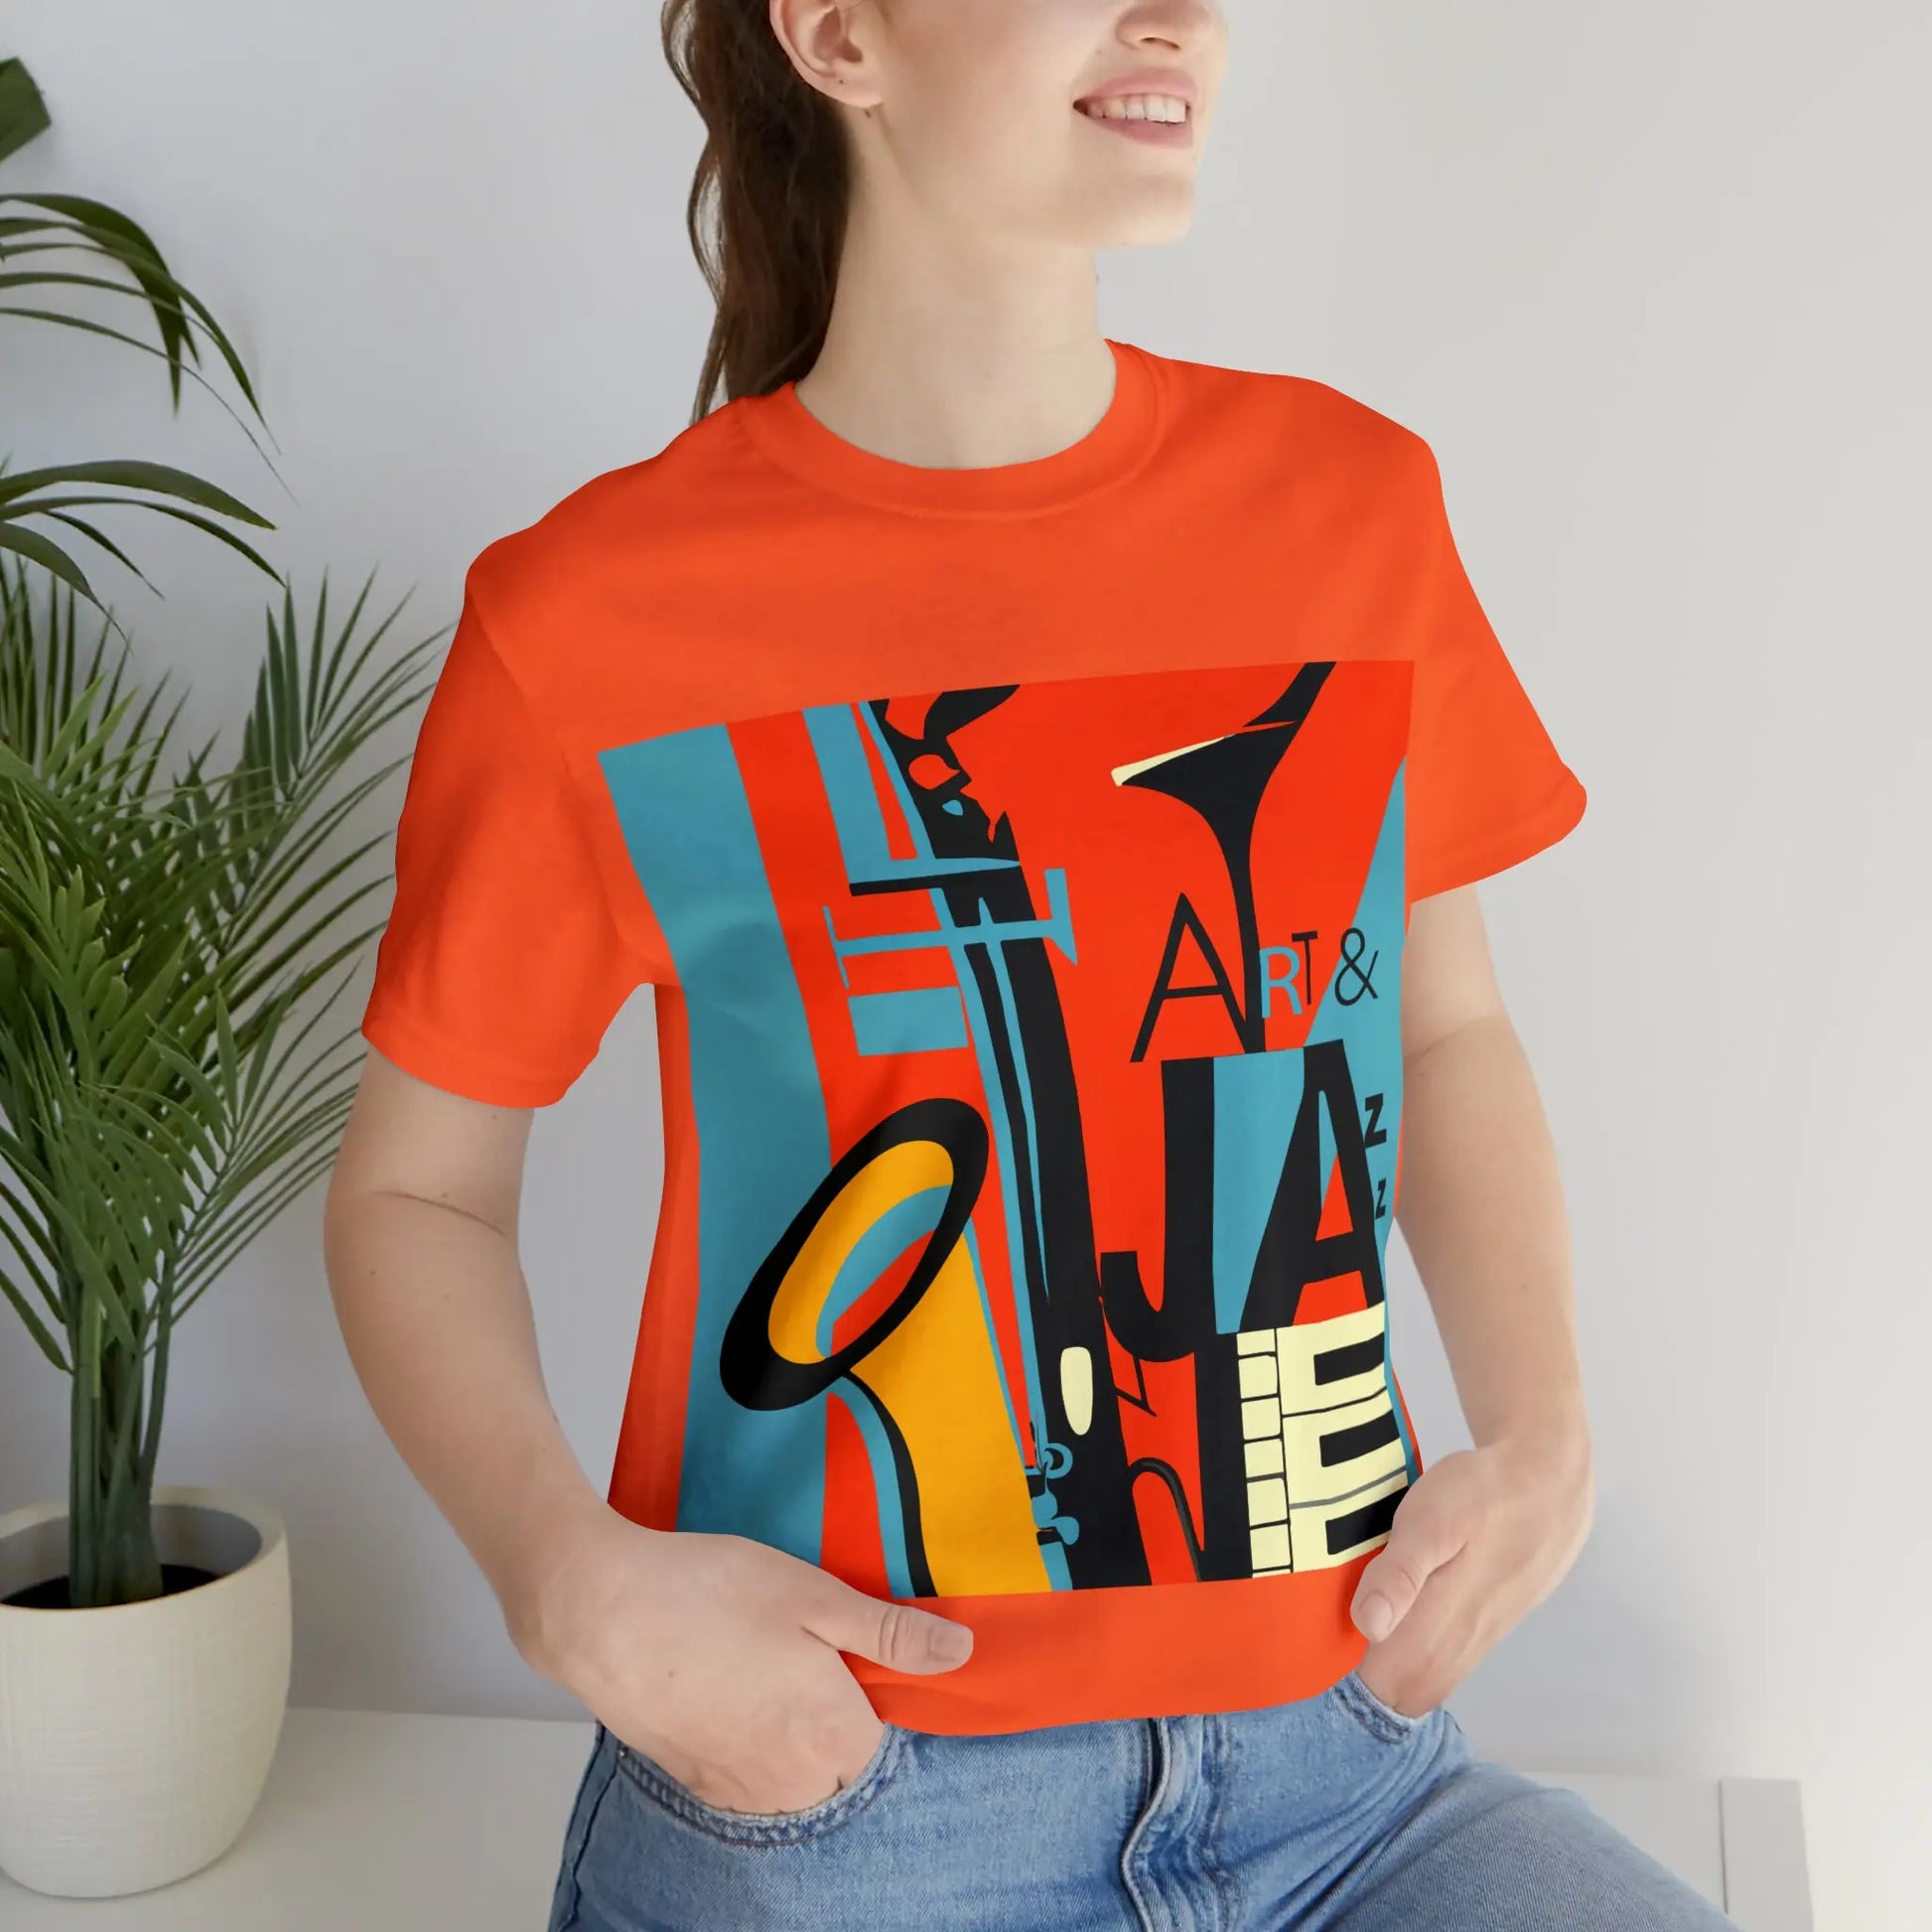 Art & Jazz Vintage Graphic T-Shirt | Unisex Jersey Short Sleeve Tee 